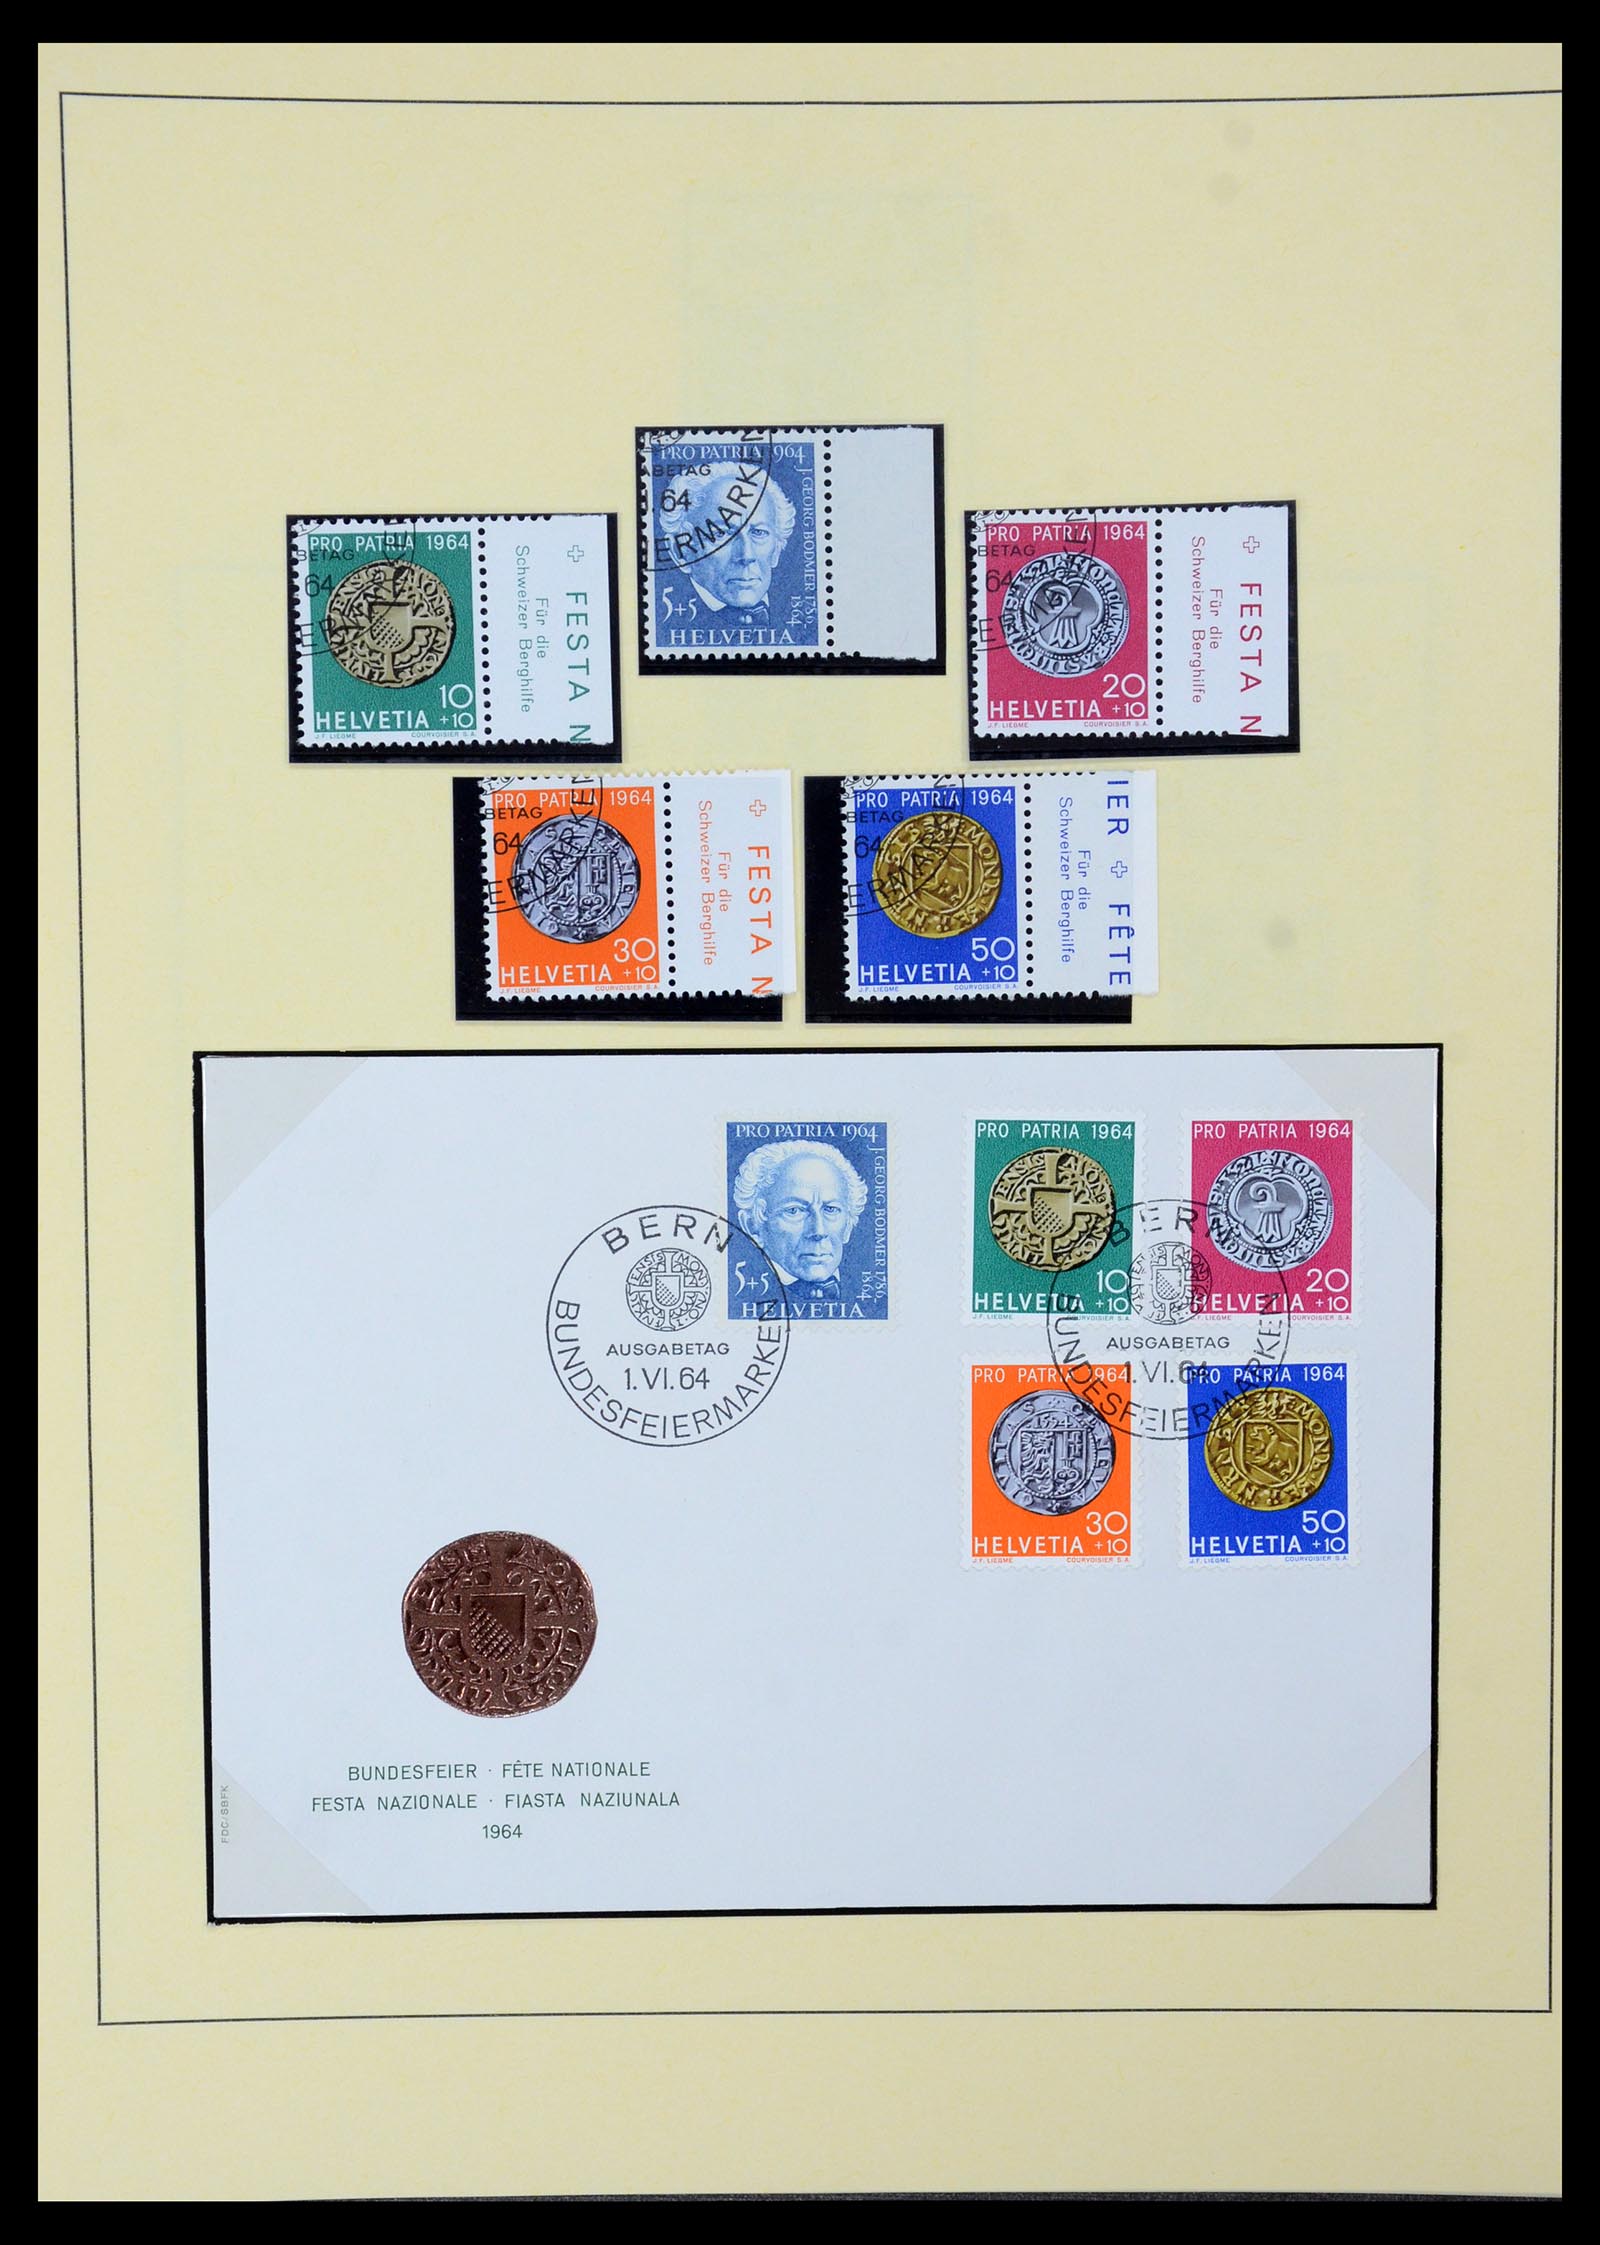 35668 052 - Stamp Collection 35668 Switzerland Pro Juventute and Pro Patria 1910-197